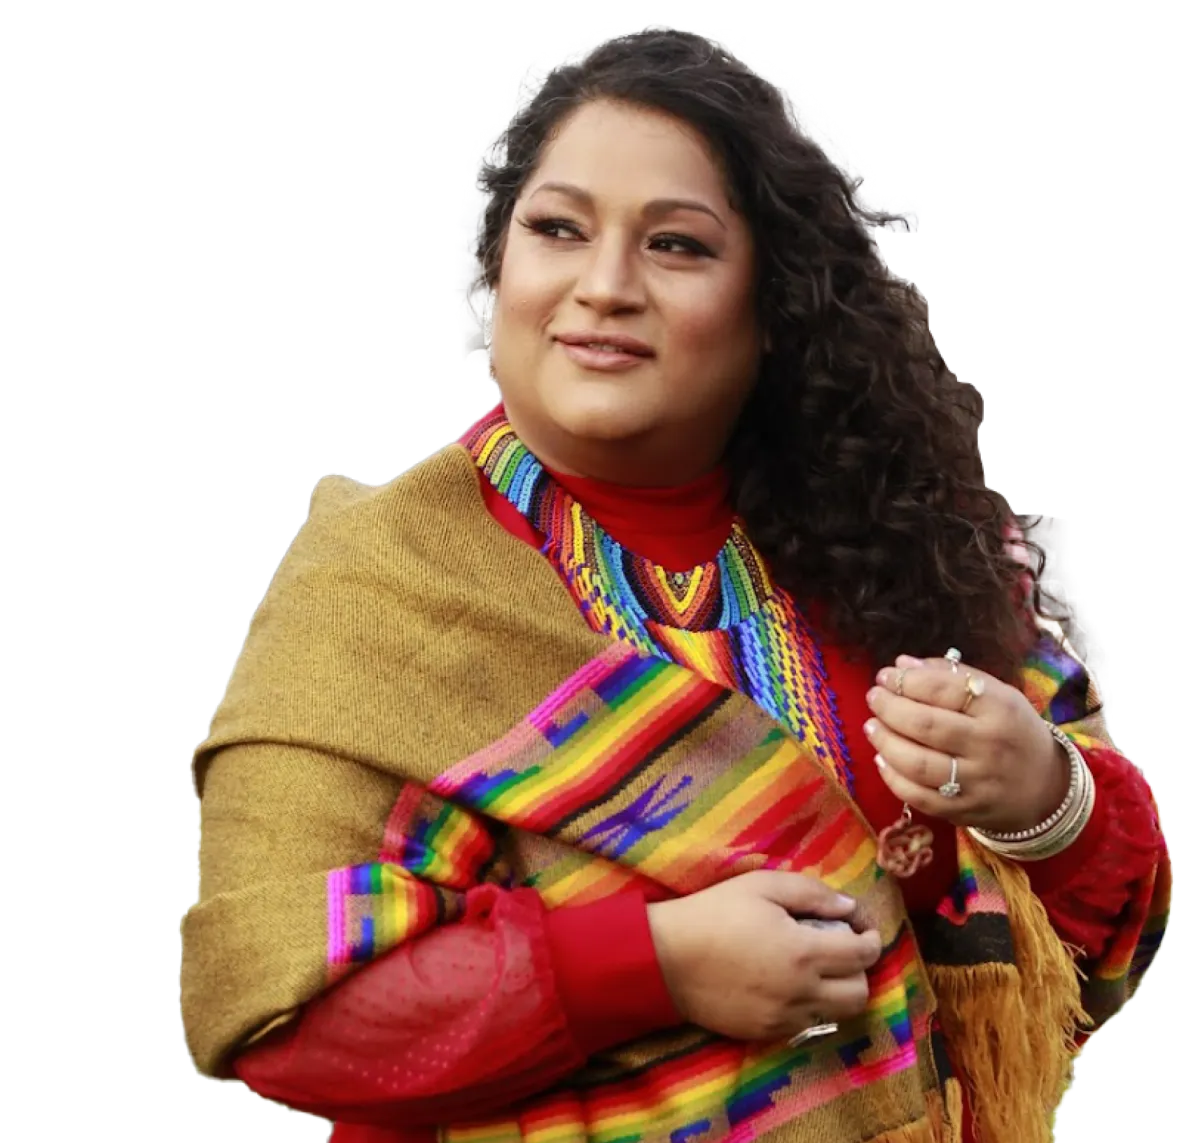 Image of Jikara Starita wearing a colorful wrap or shawl.